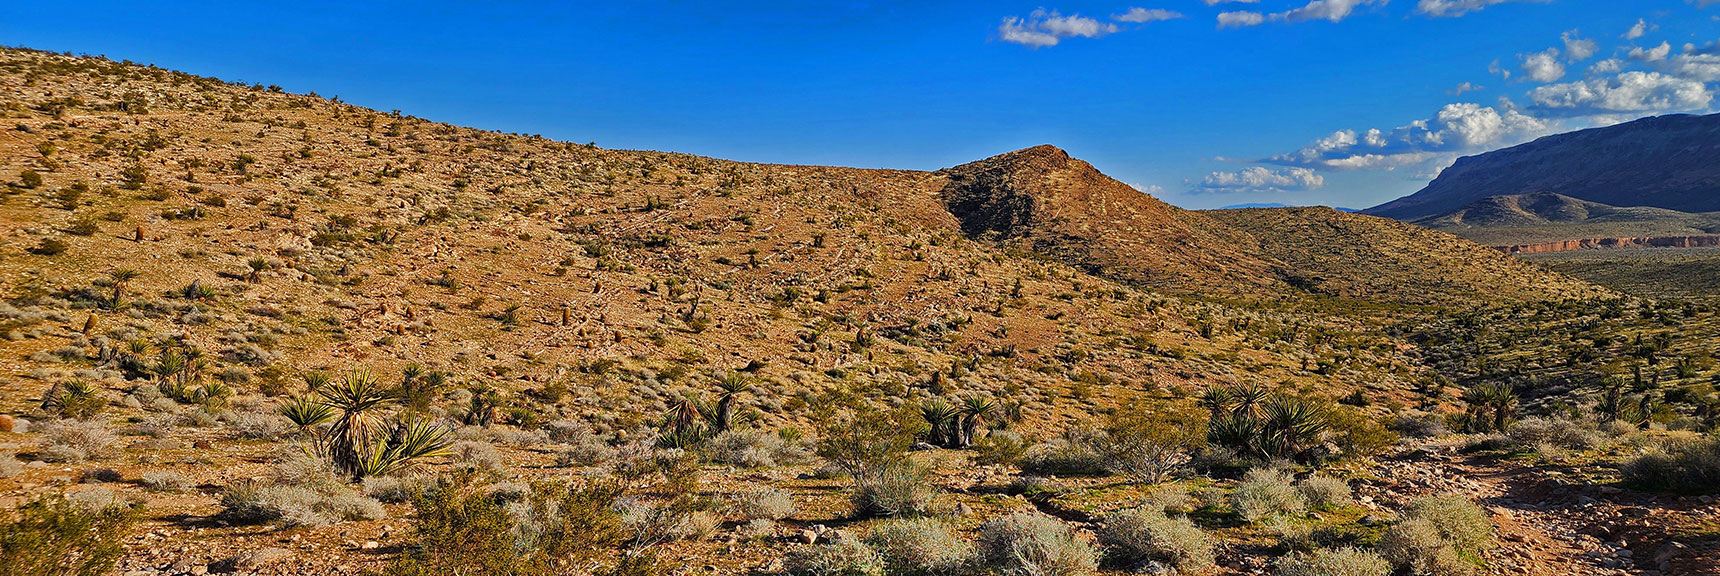 Round Peak 3844, Turn Left onto Gene's Trail. | Gray Cap Ridge Southeast Summit | La Madre Mountains Wilderness, Nevada